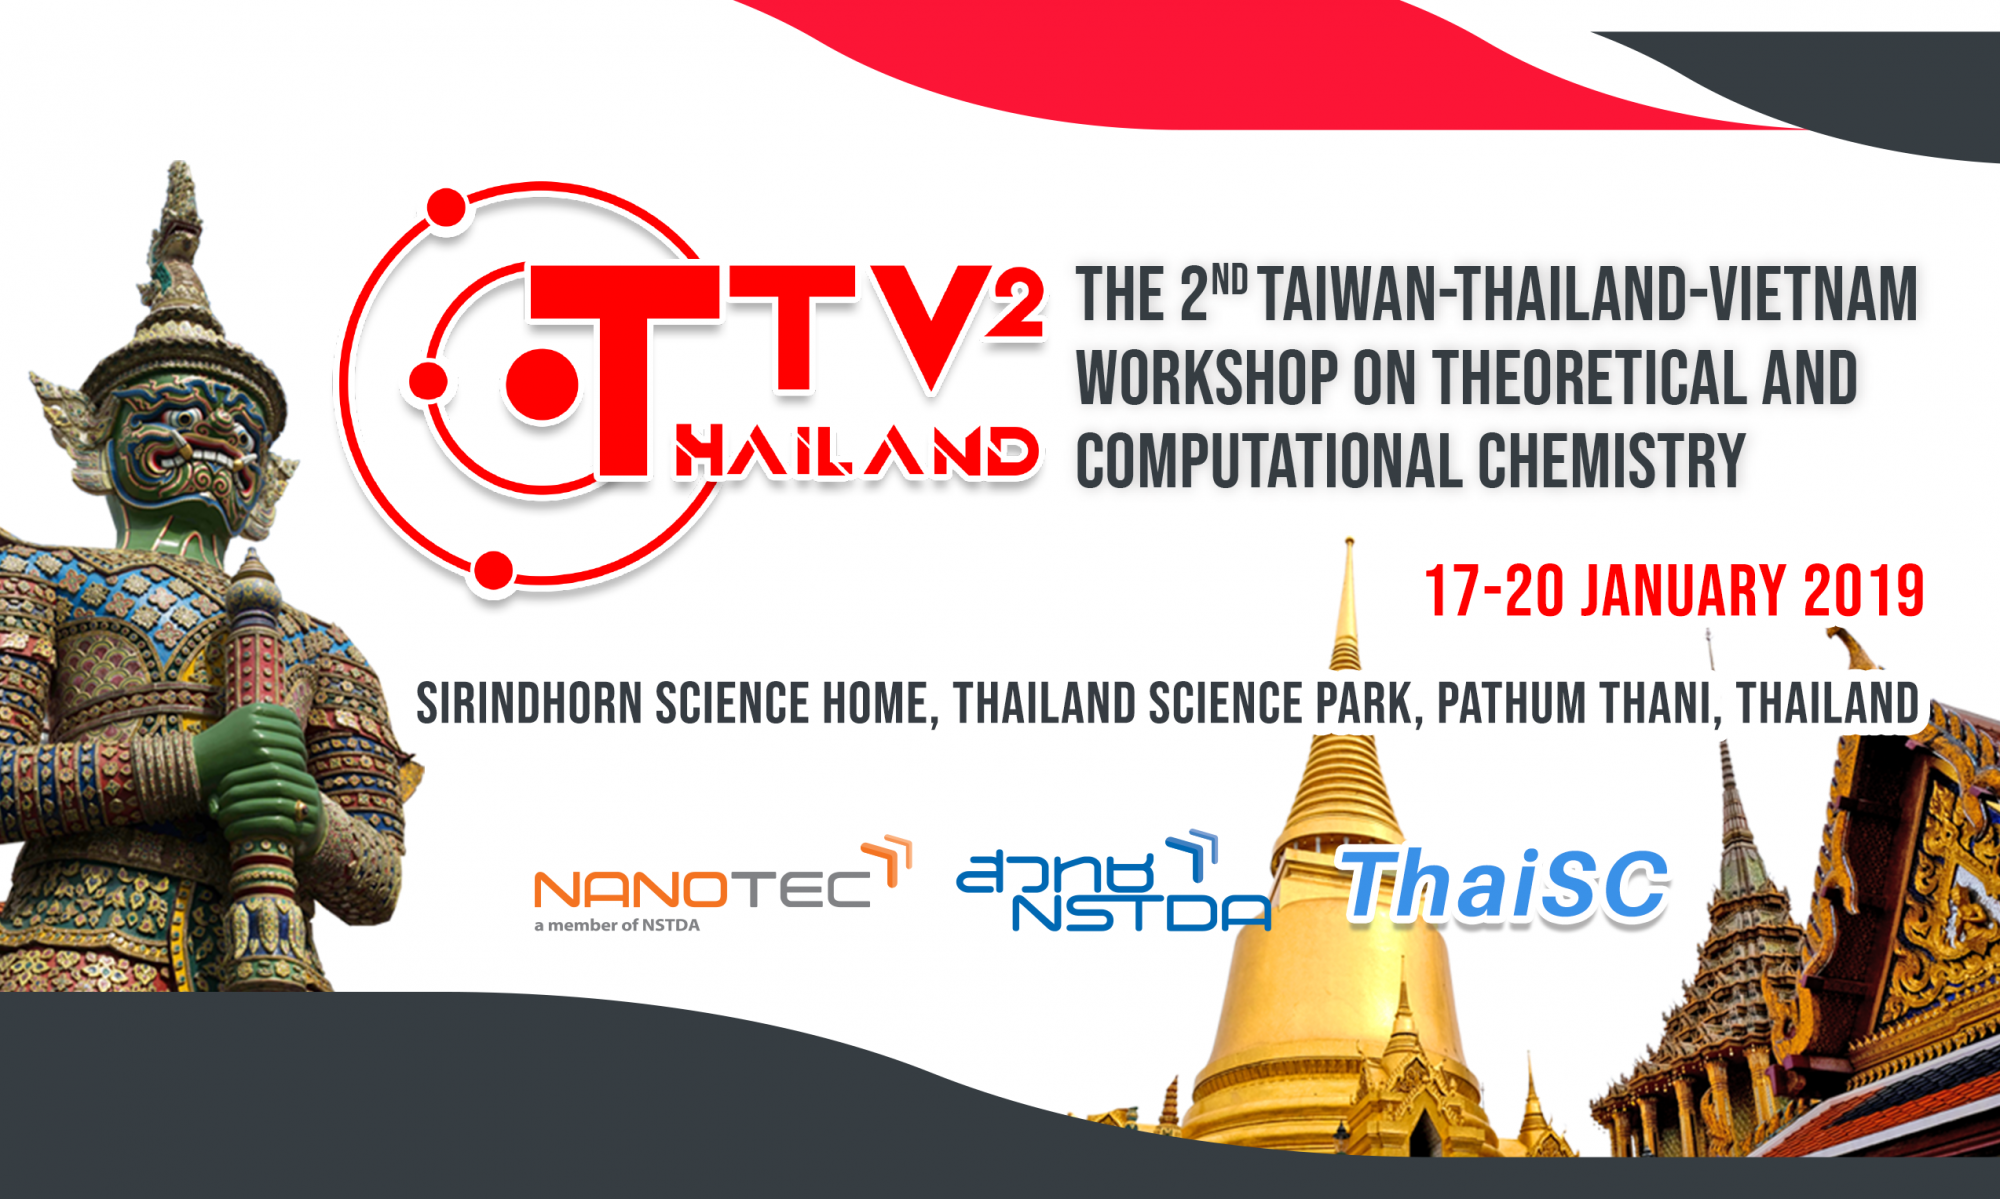 Taiwan-Thailand-Vietnam Workshop in Computational Chemistry